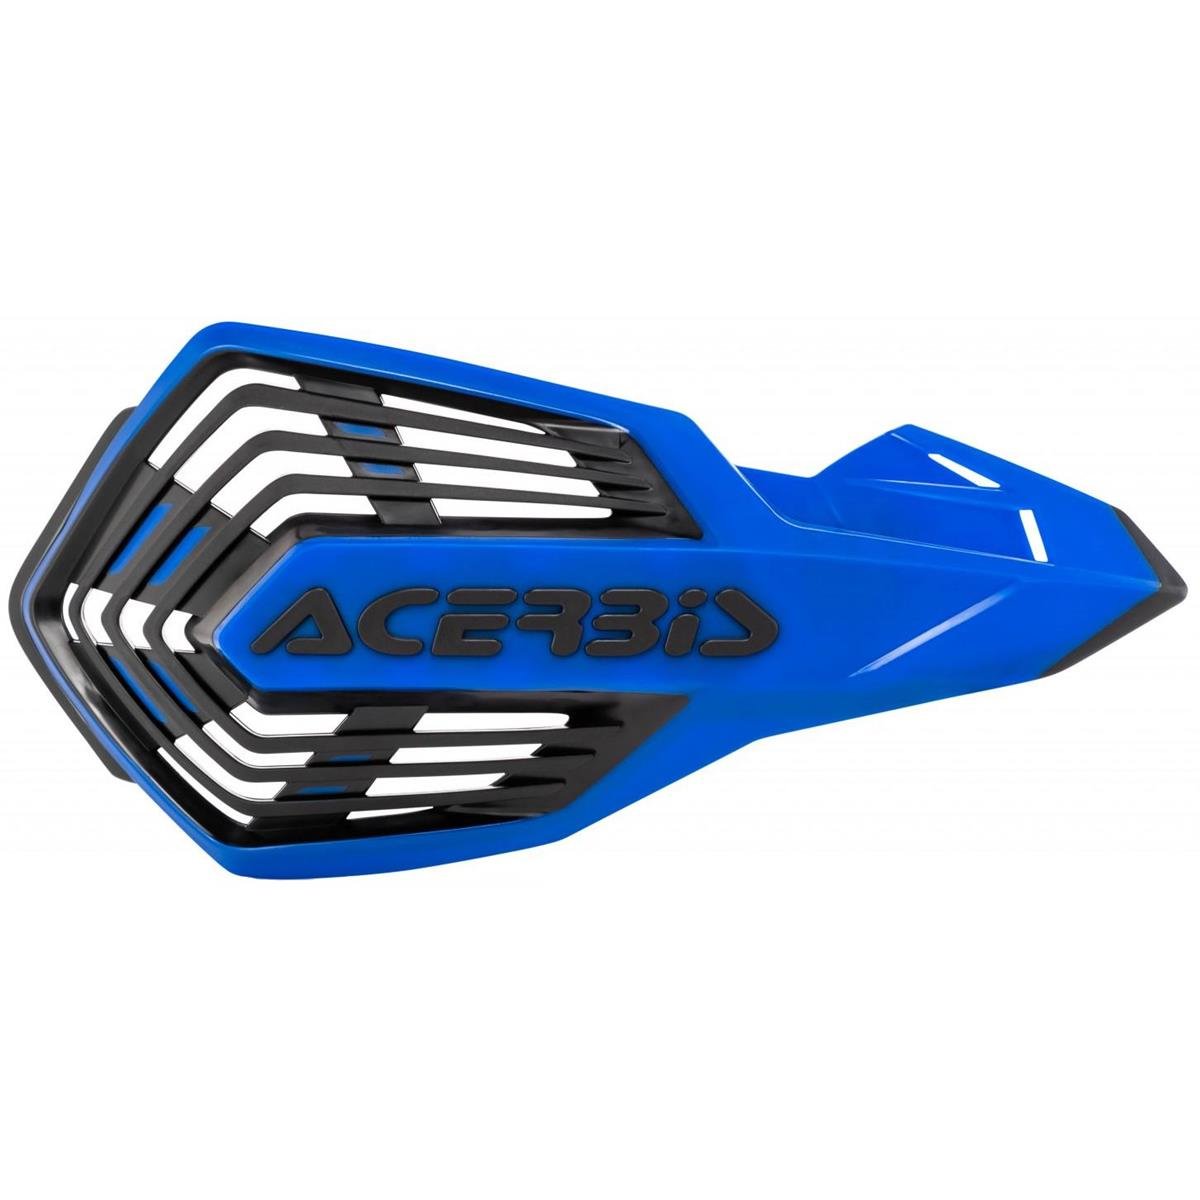 Acerbis Handguards X-Future Blue/Black, Incl. Mounting Kit